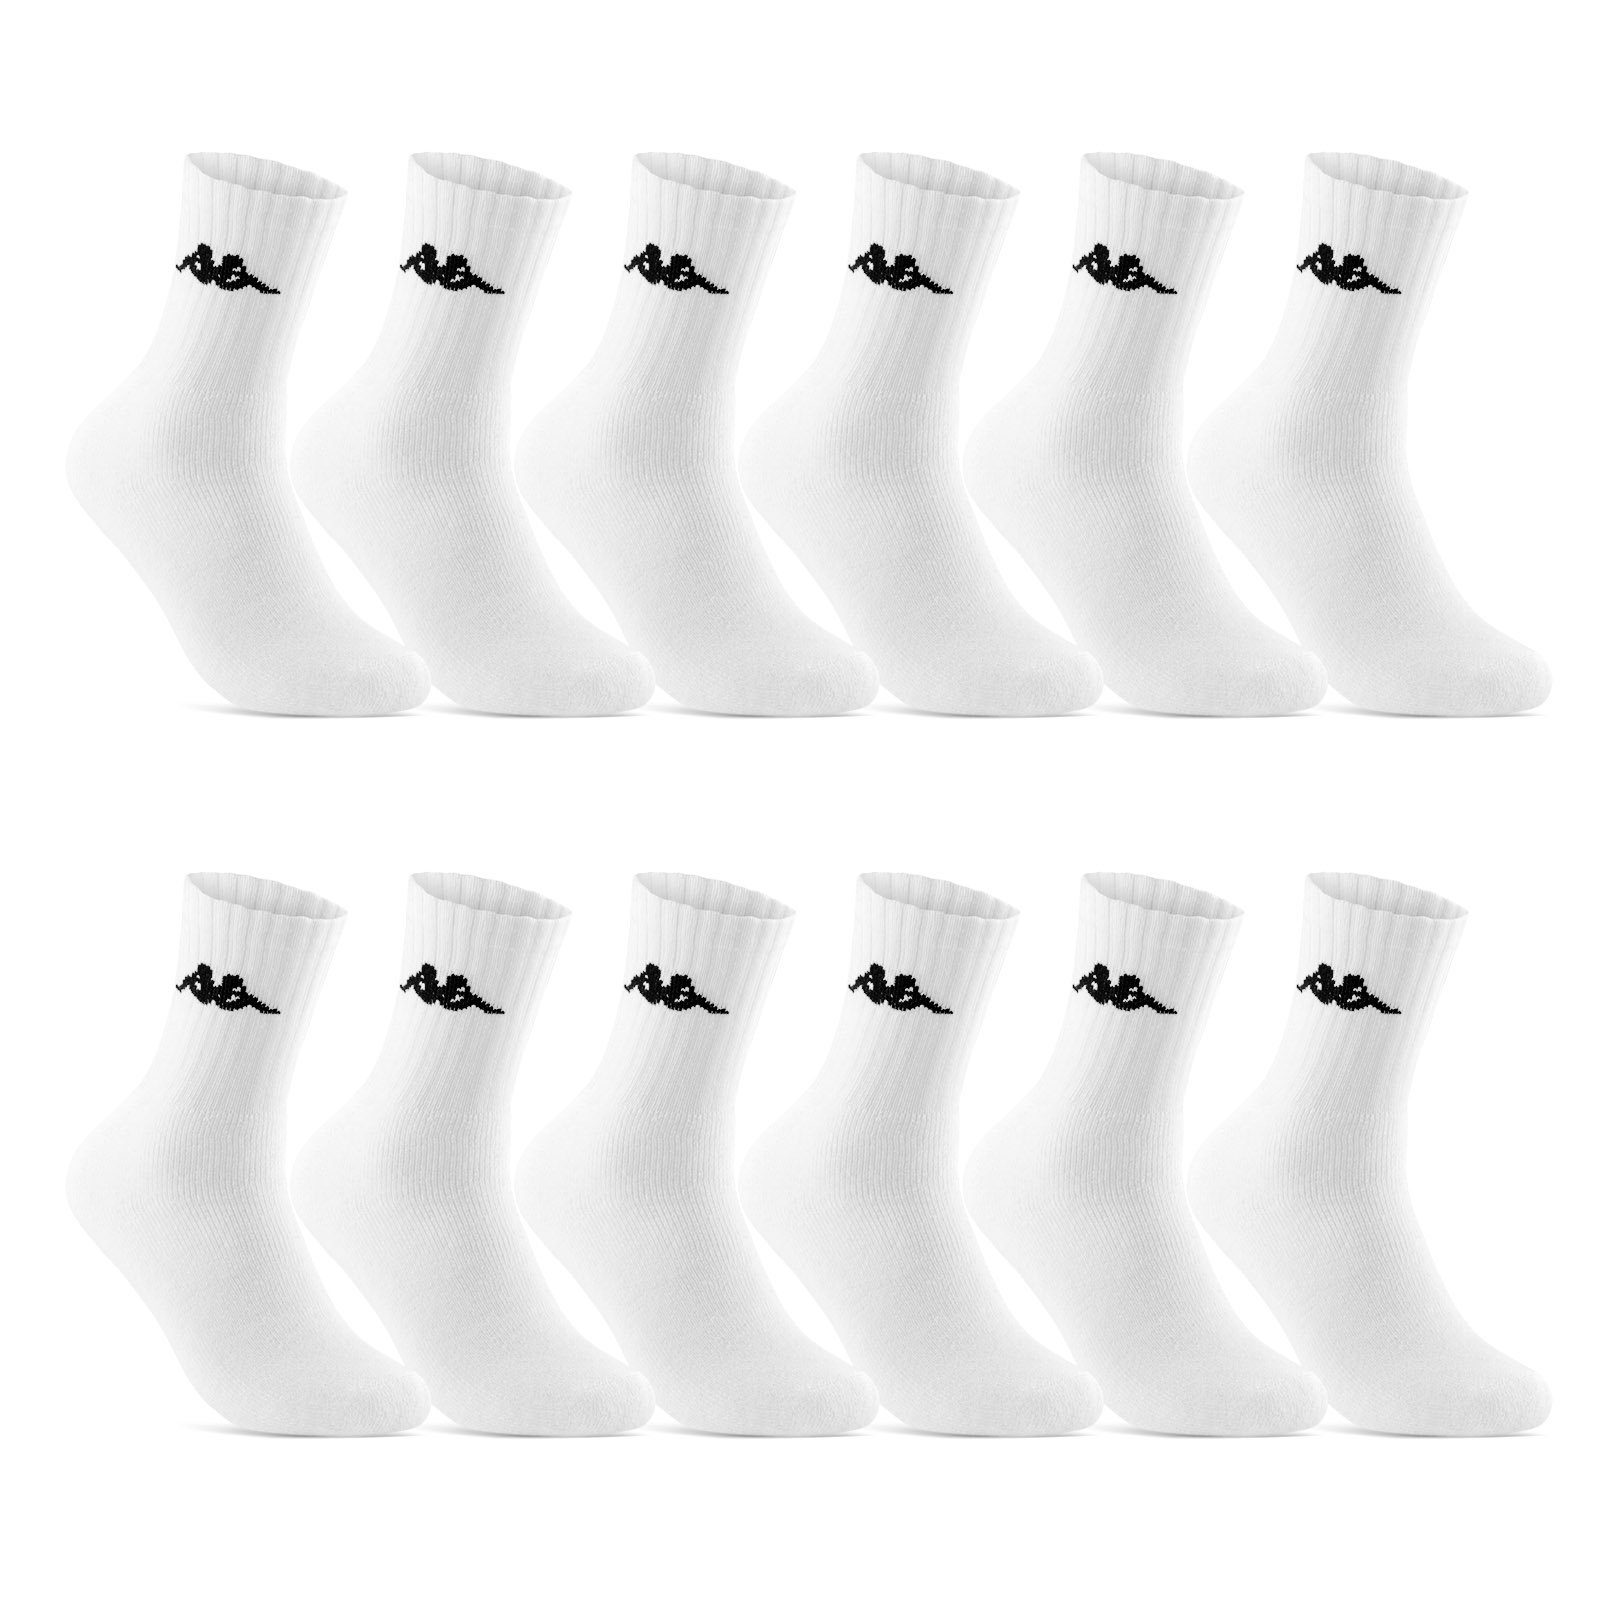 sockenkauf24 Sportsocken 6 oder 12 Paar KAPPA Socken Herren & Damen Sportsocken (Weiß, 12-Paar, 35-38) Arbeitssocken Baumwolle